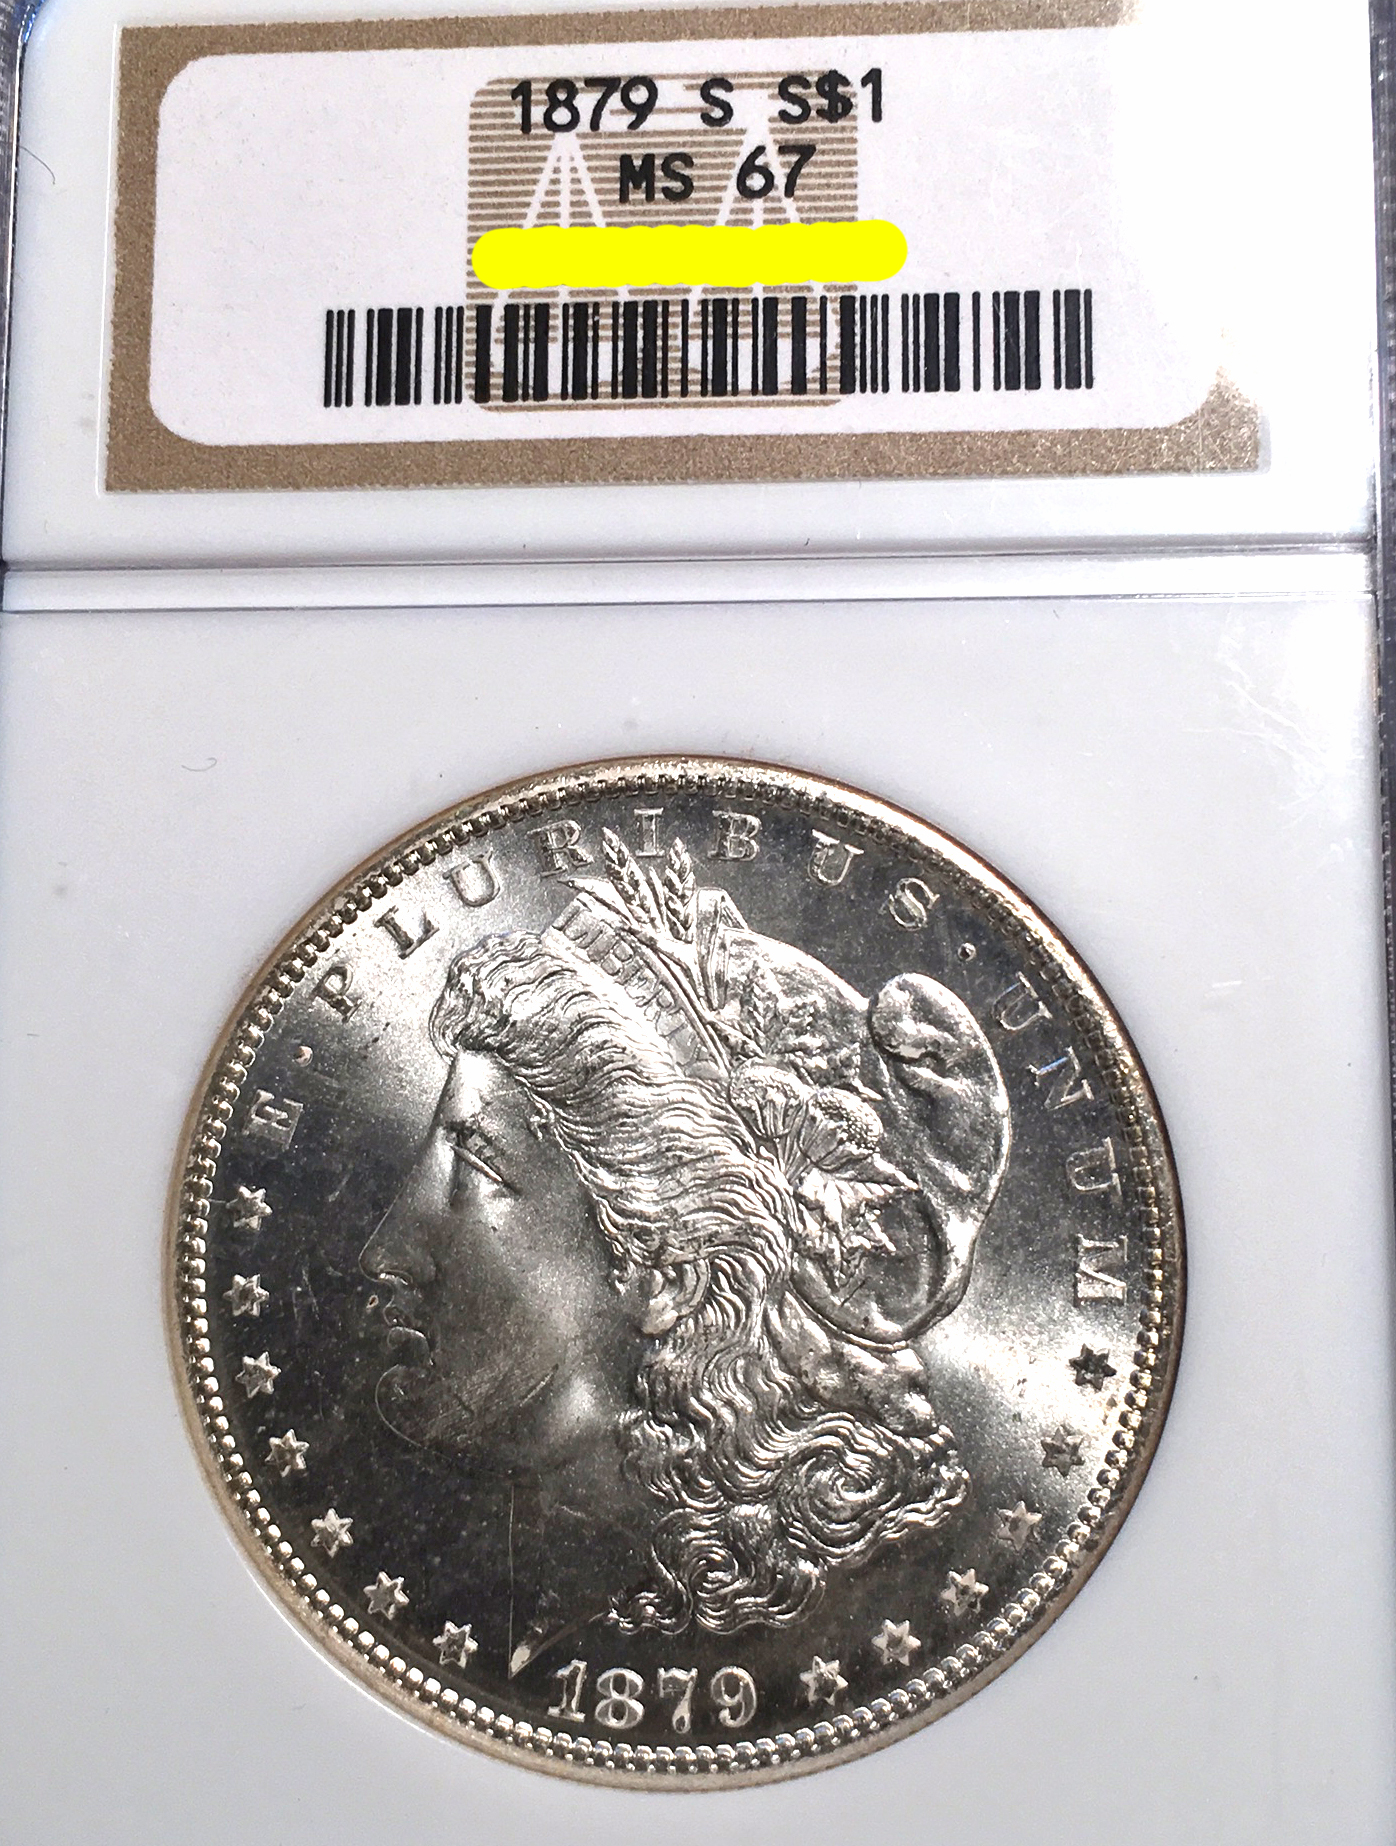 December 2016 Coin Show 1879 S Morgan Dollar MS-67 NGC